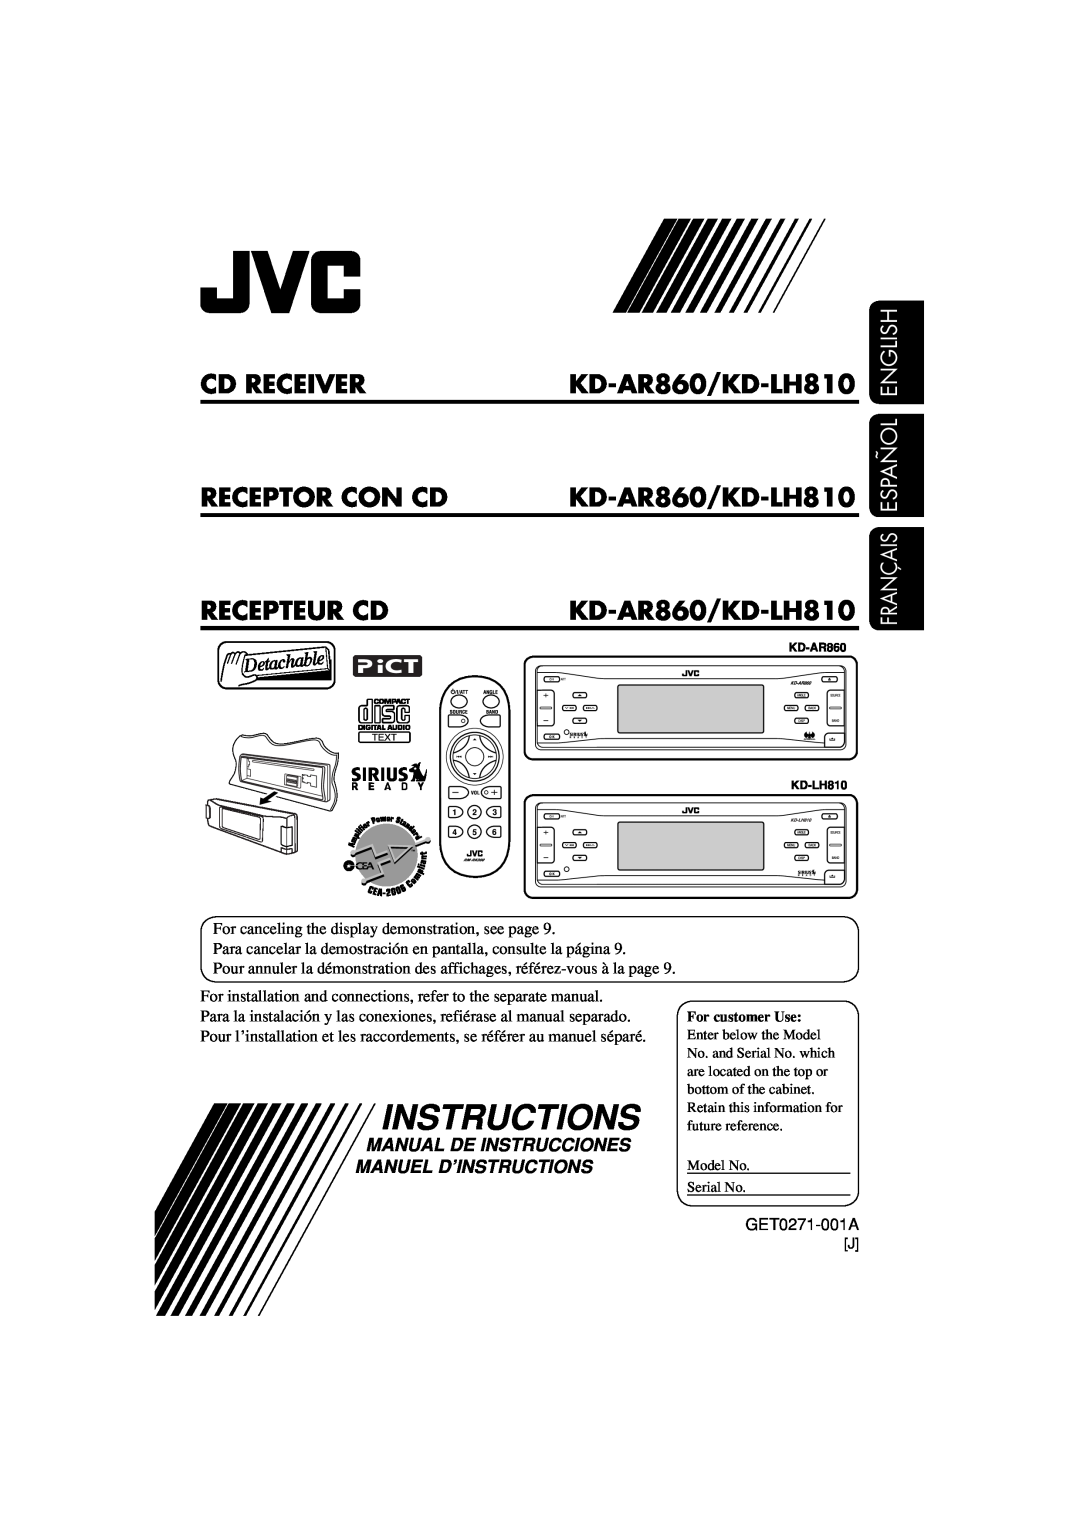 JVC manual Cd Receiver Receptor Con Cd Recepteur Cd, KD-AR860/KD-LH810 KD-AR860/KD-LH810, Français Español English 